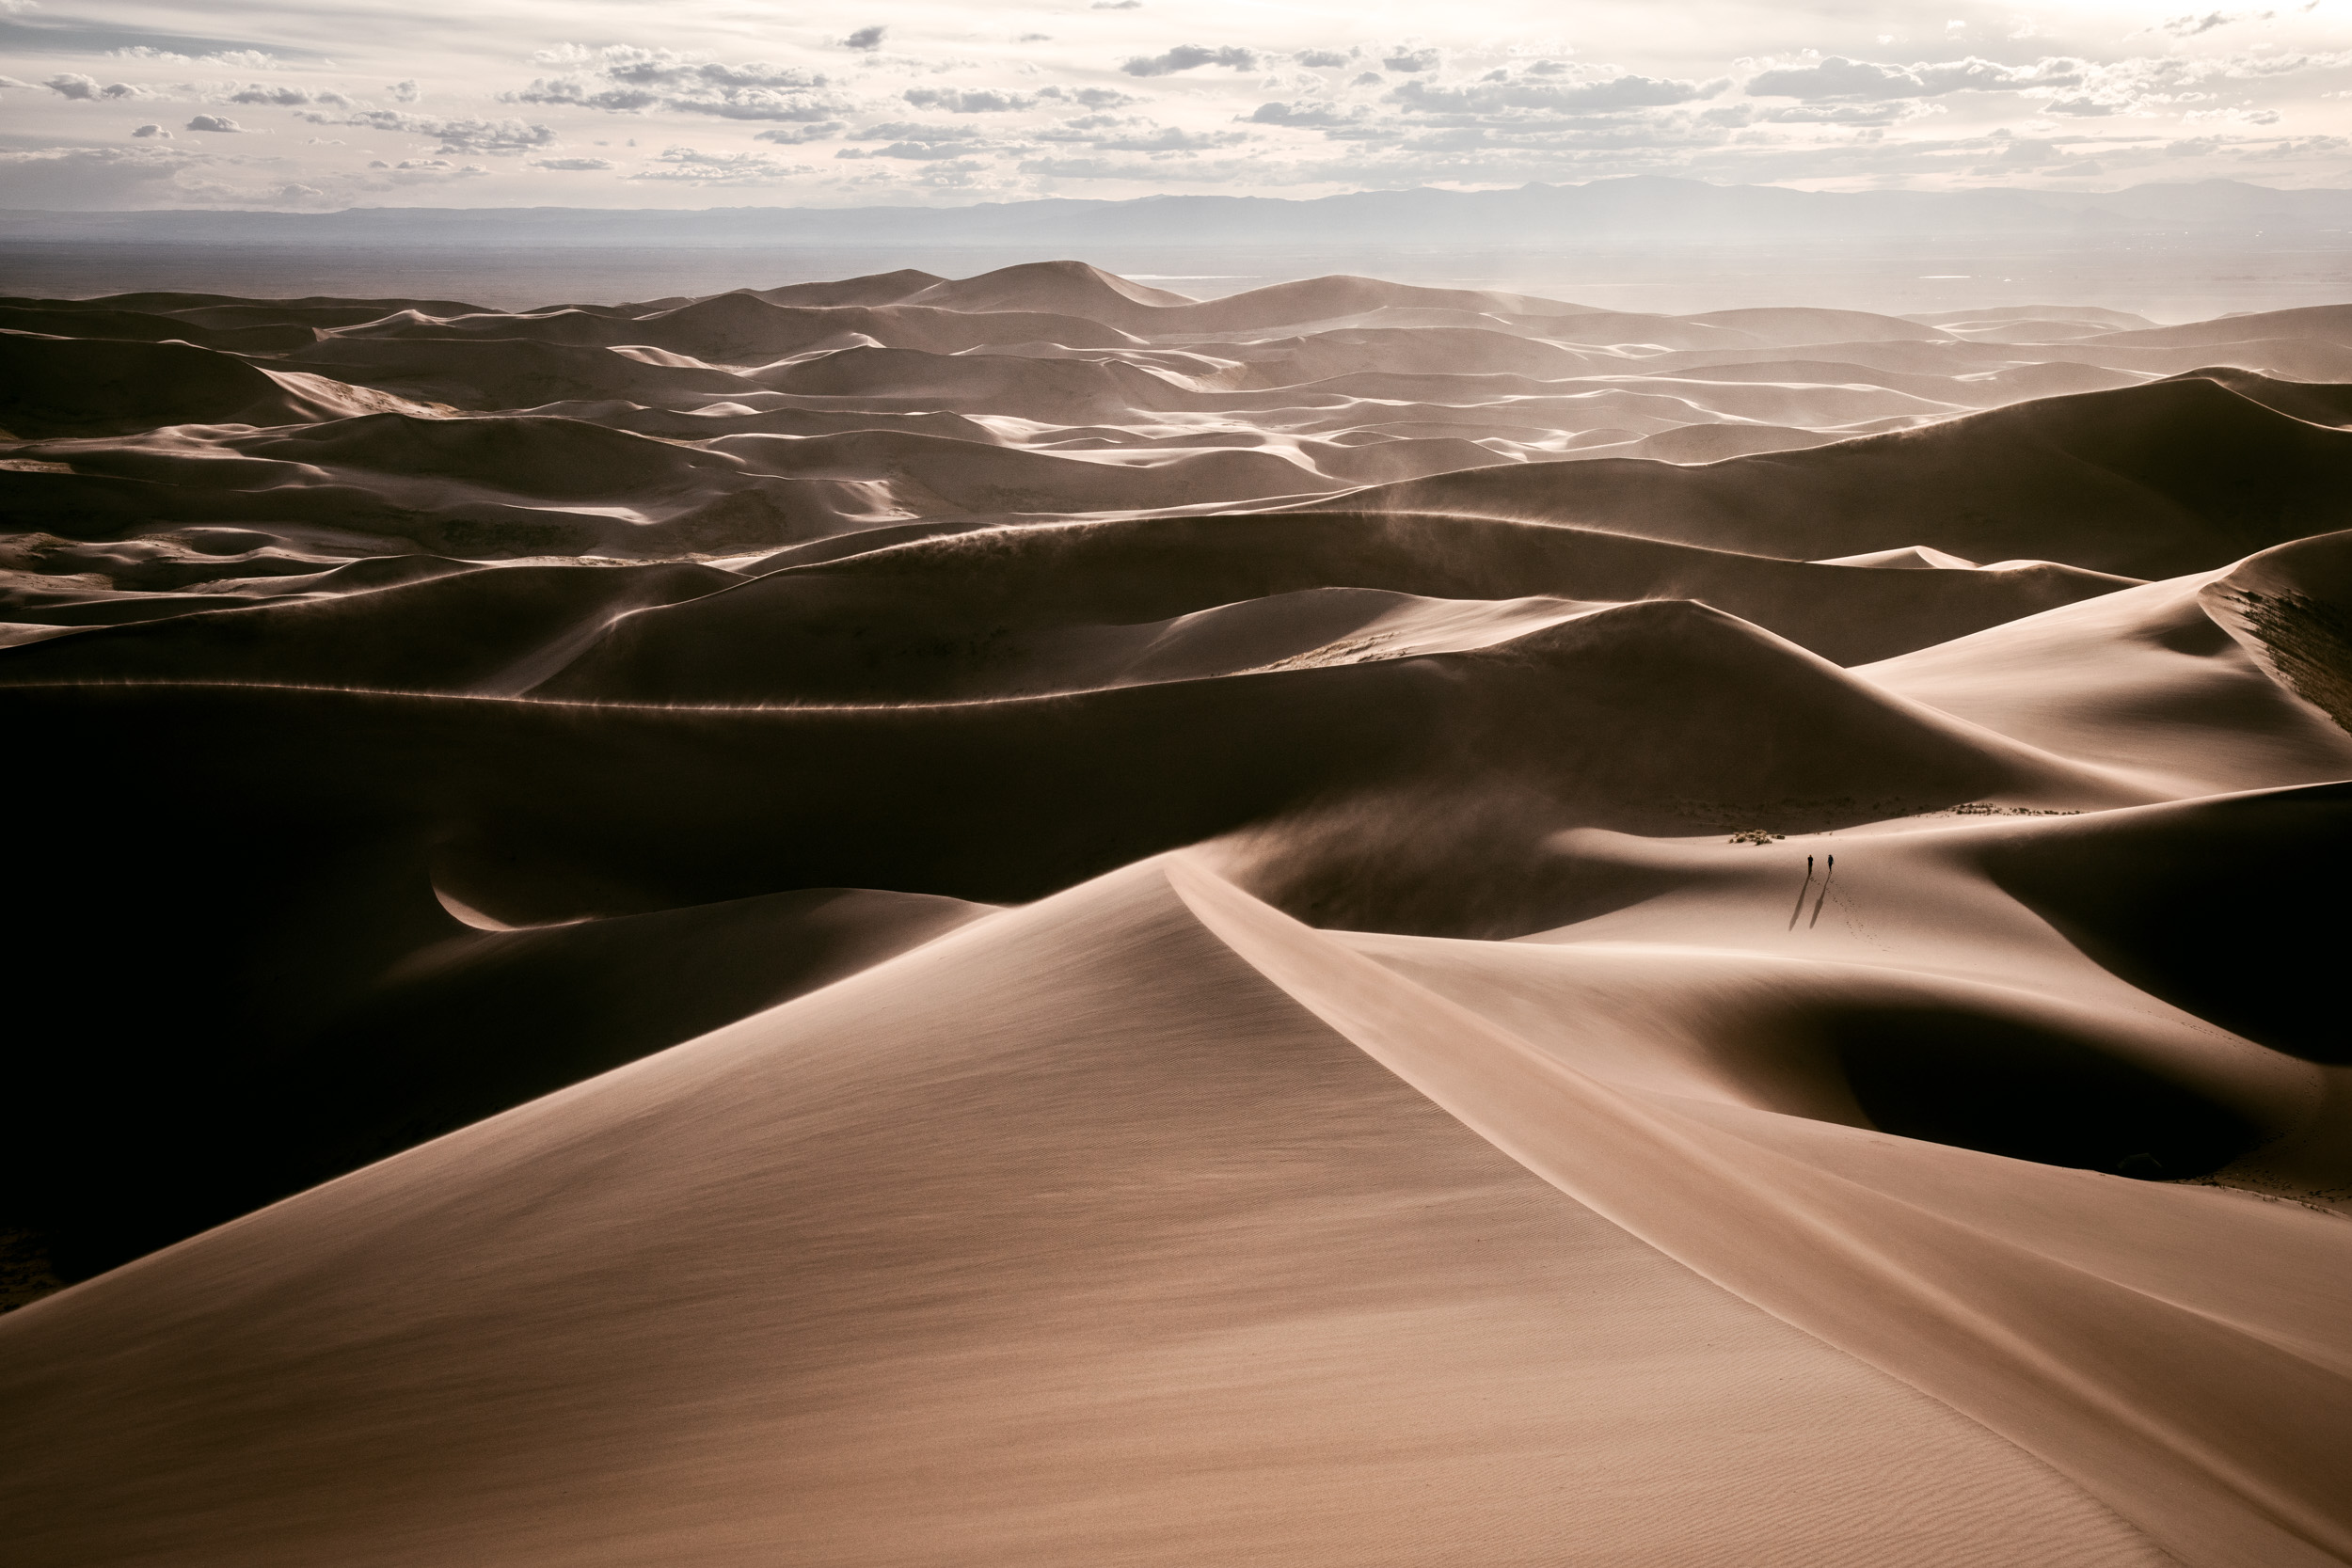 Jason_Bax_SQ_Landscape_Great_Sand_Dunes_Colorado_BAX7409-Edit-2.jpg